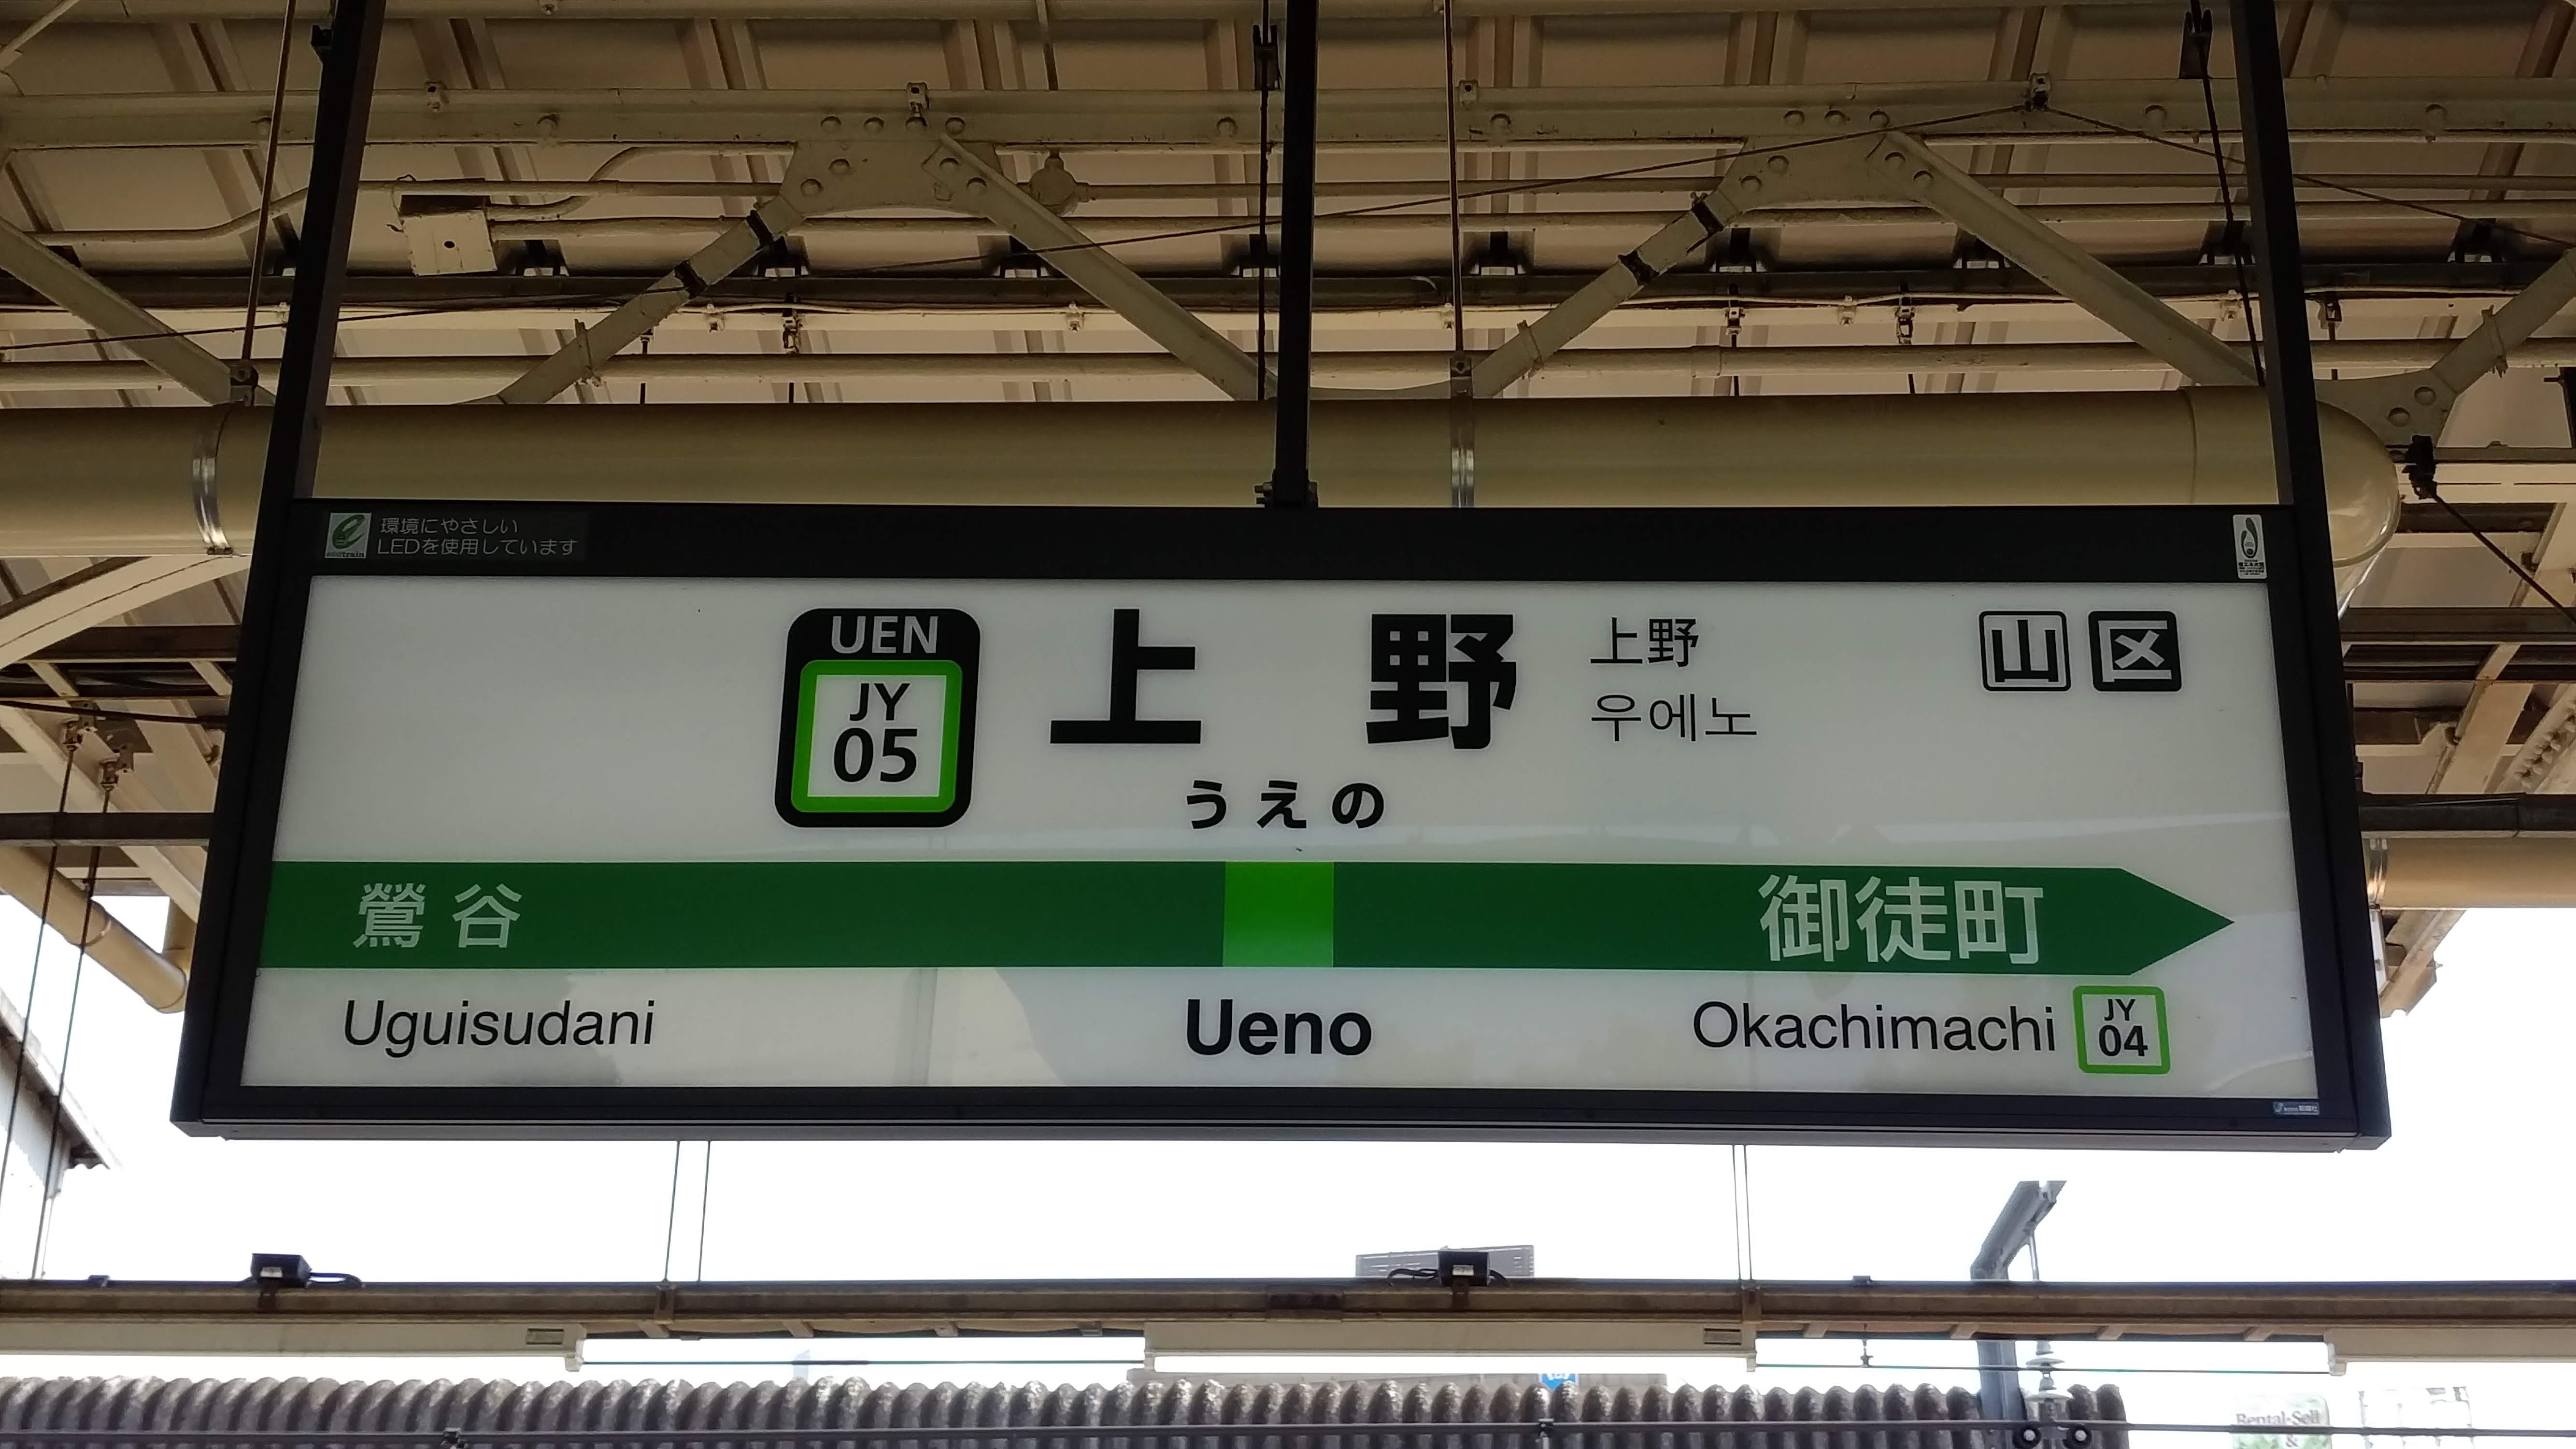 ueno subway platform sign